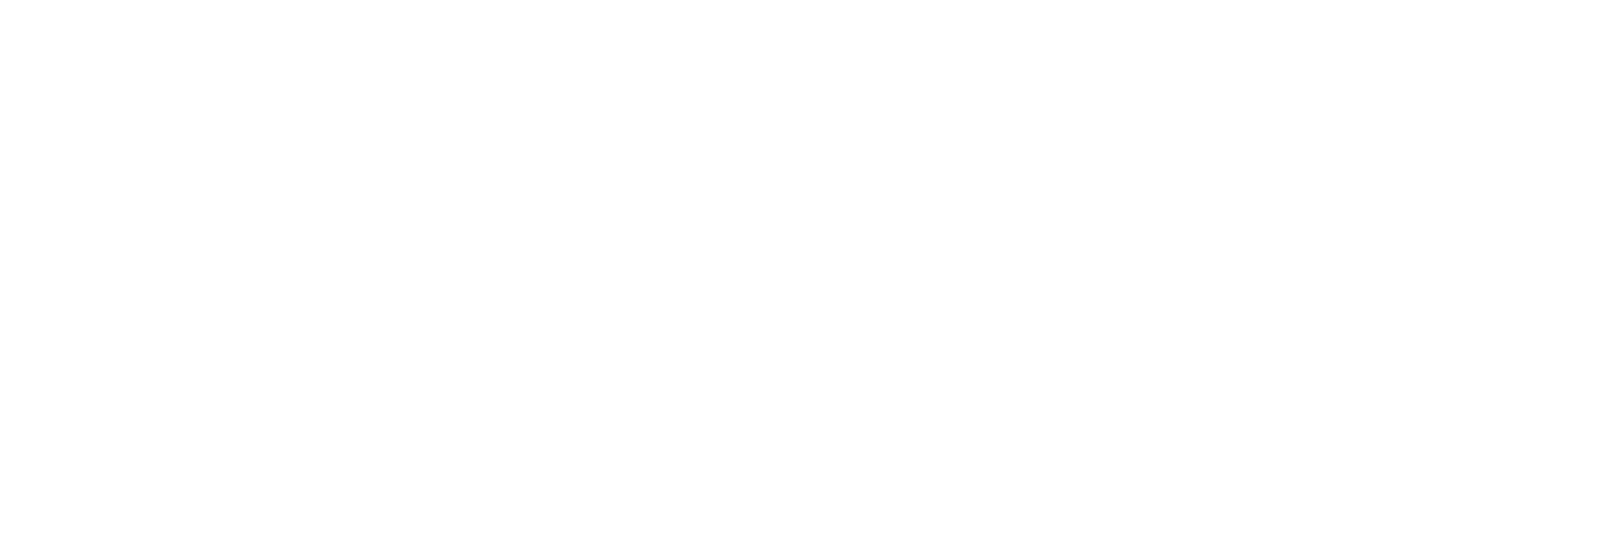 Dominion Energy Logo groß für dunkle Hintergründe (transparentes PNG)